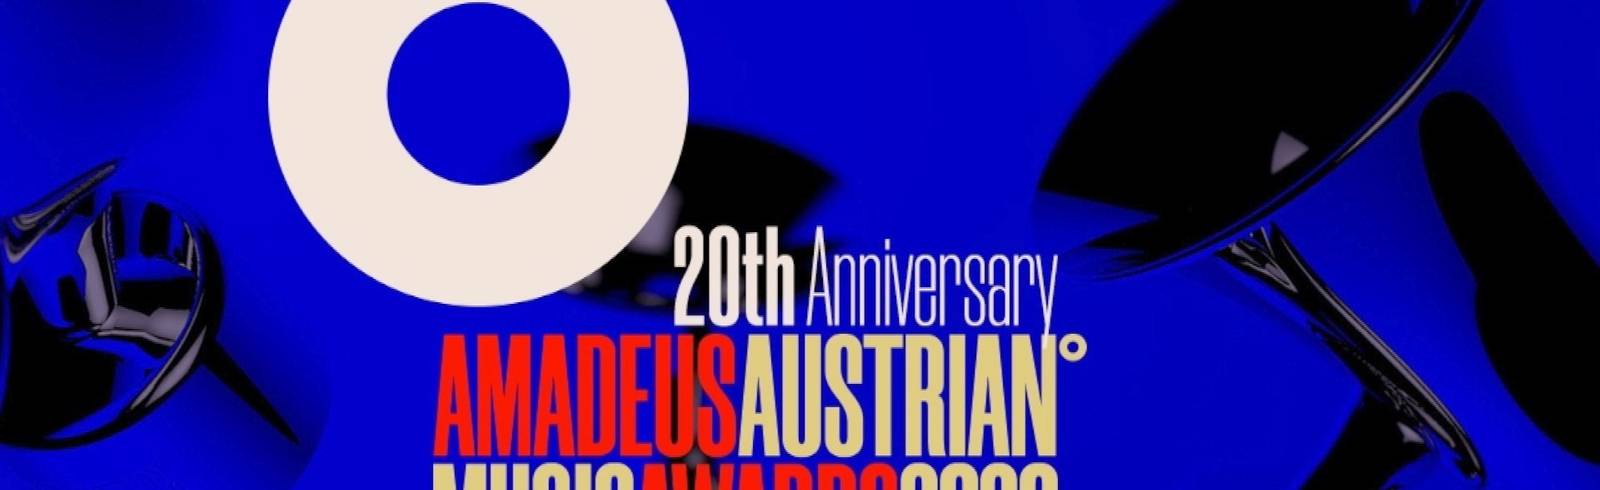 Amadeus Austrian Music Awards feiern Jubiläum